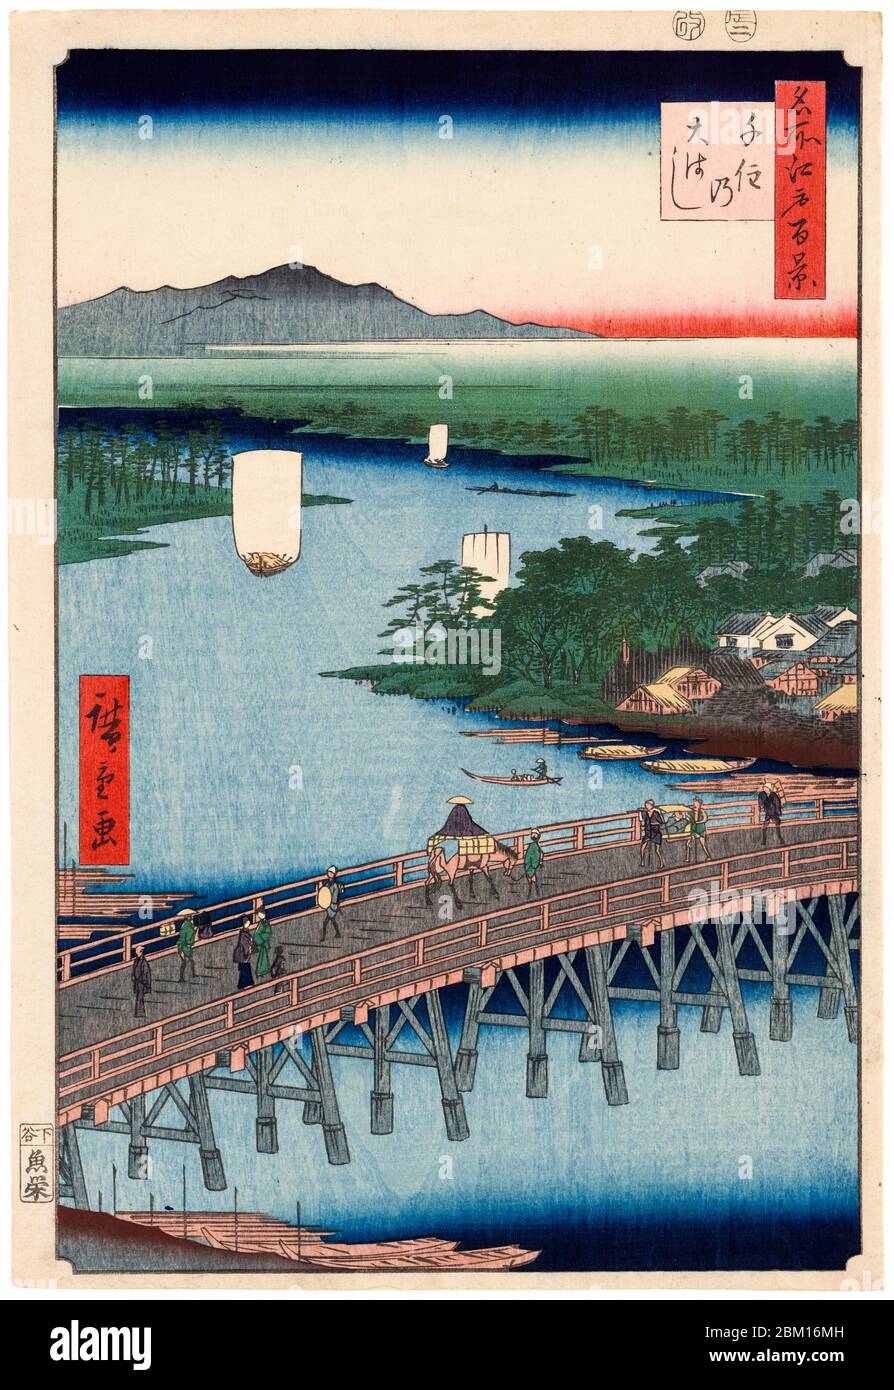 Utagawa Hiroshige, Senju Great Bridge, aus der Serie hundert berühmte Ansichten von Edo, Holzschnitt, 1857 Stockfoto